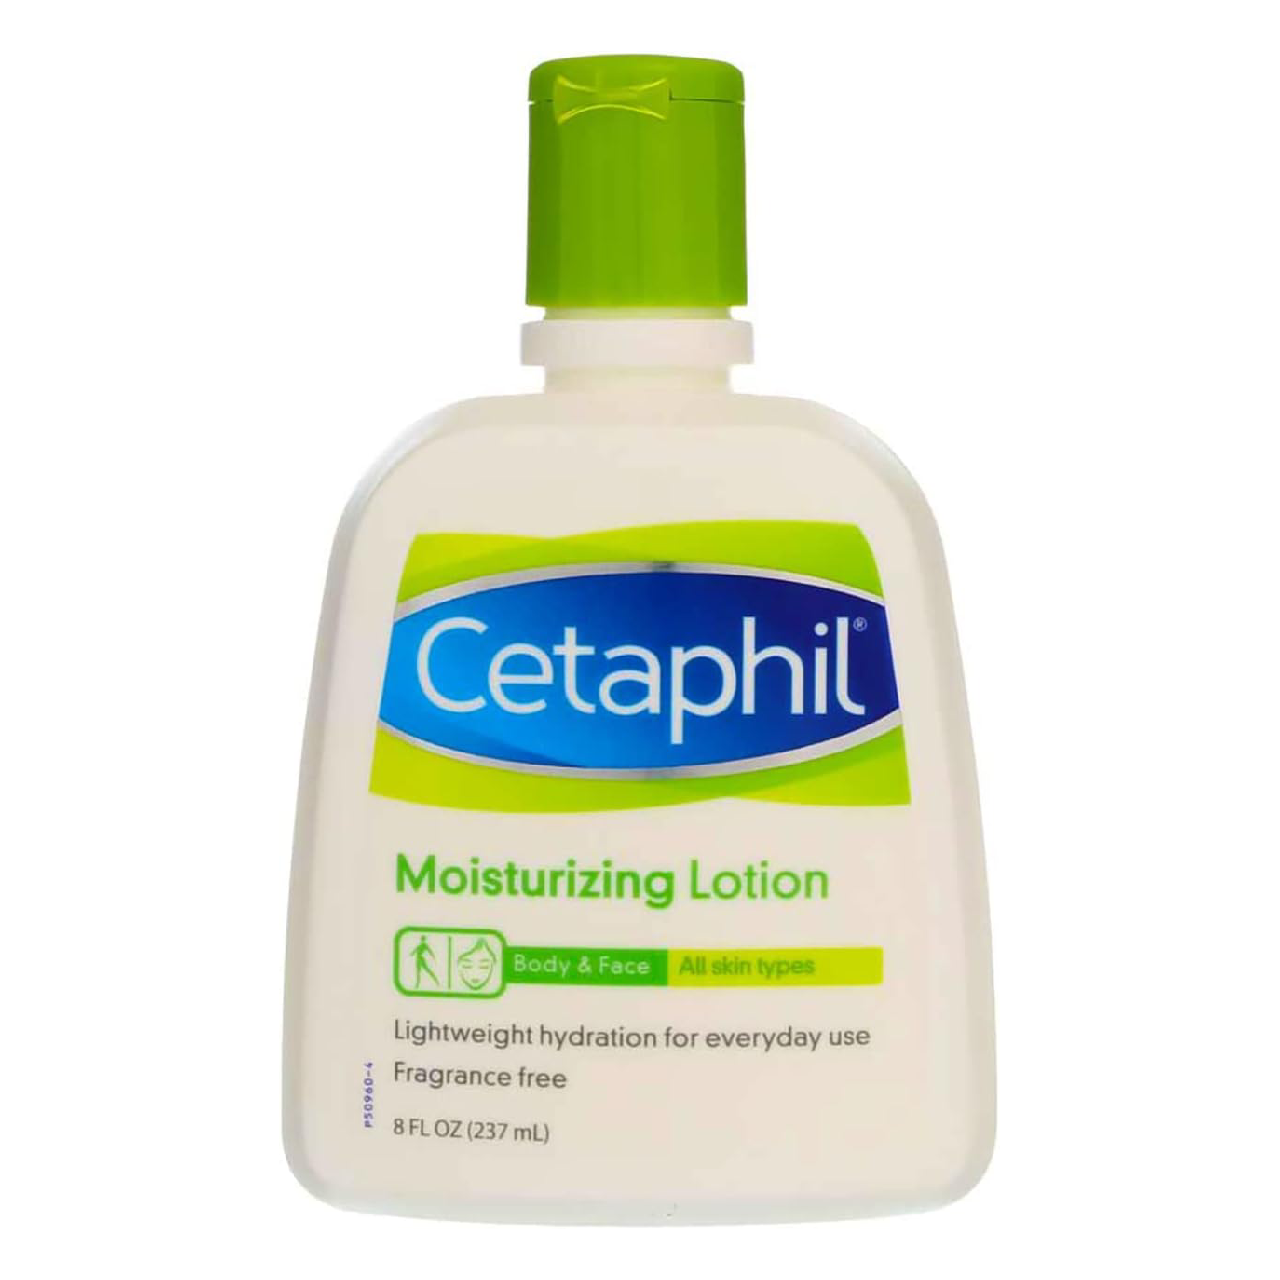 Bottle of Cetaphil Moisturizing Lotion on a white background